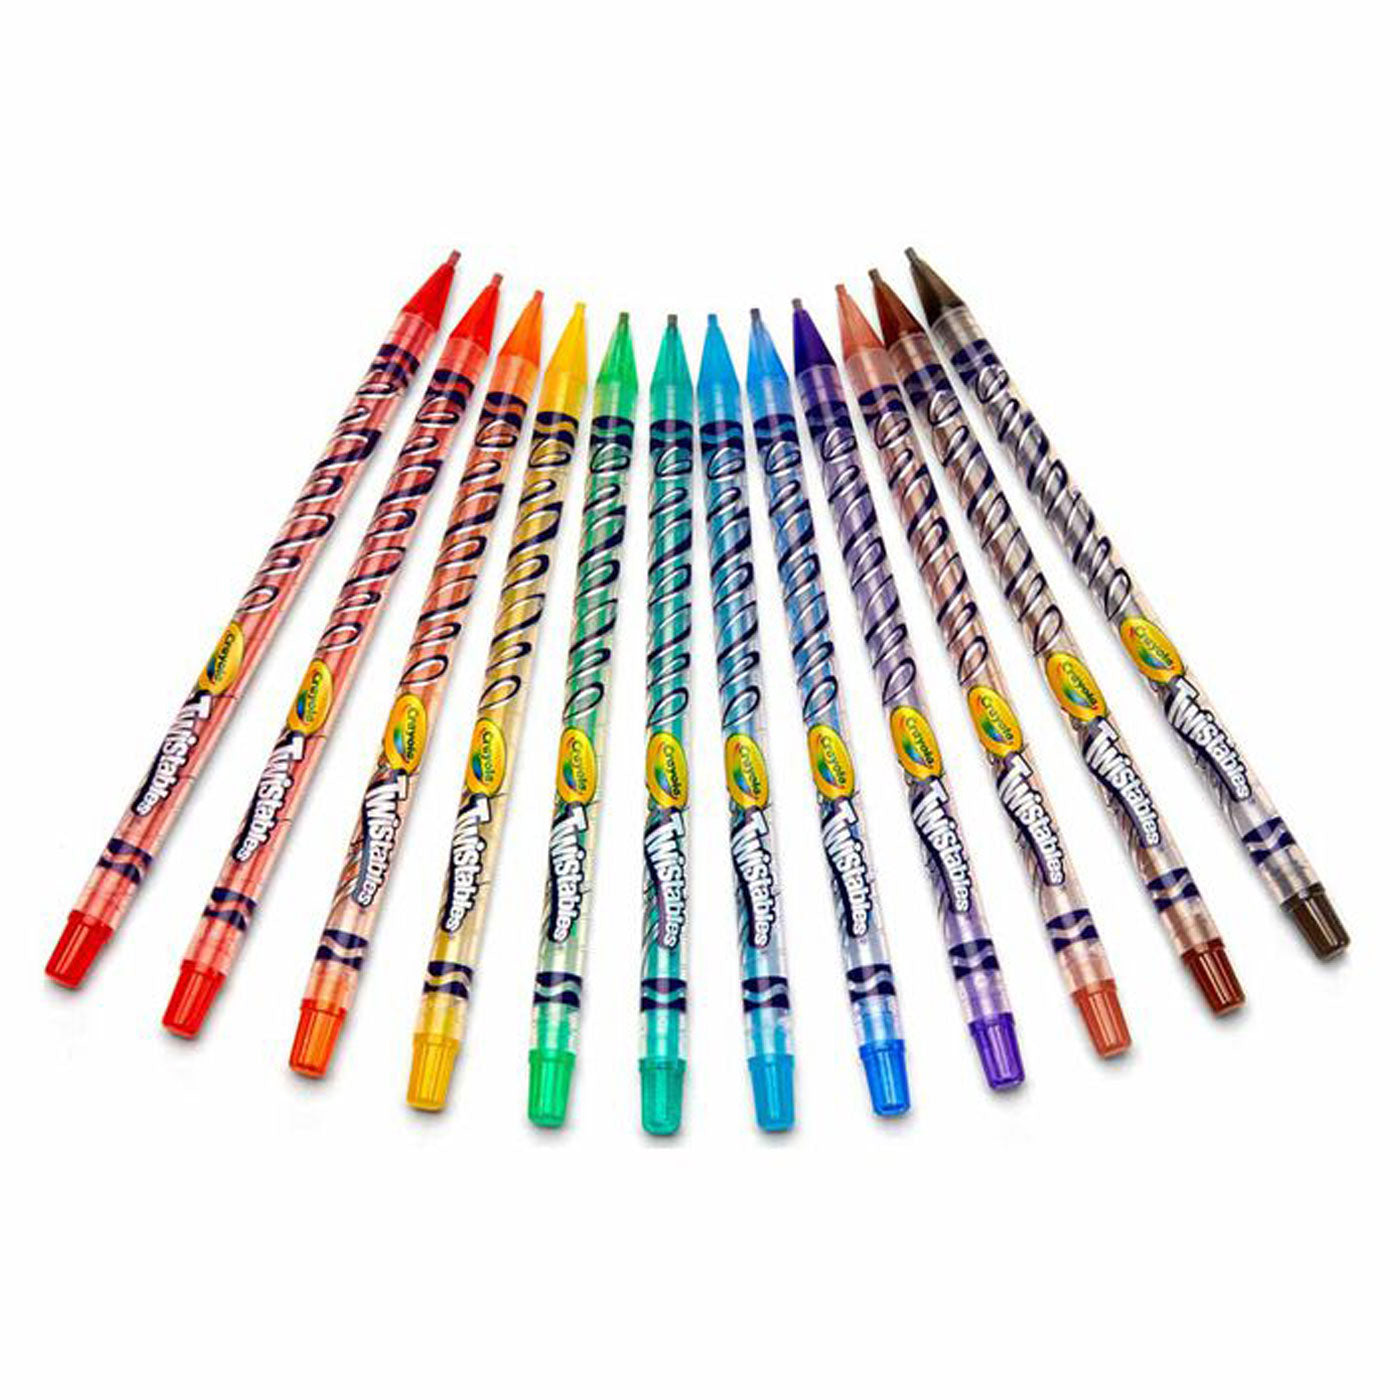 Crayola Twistables Coloured Pencils 12 Pack